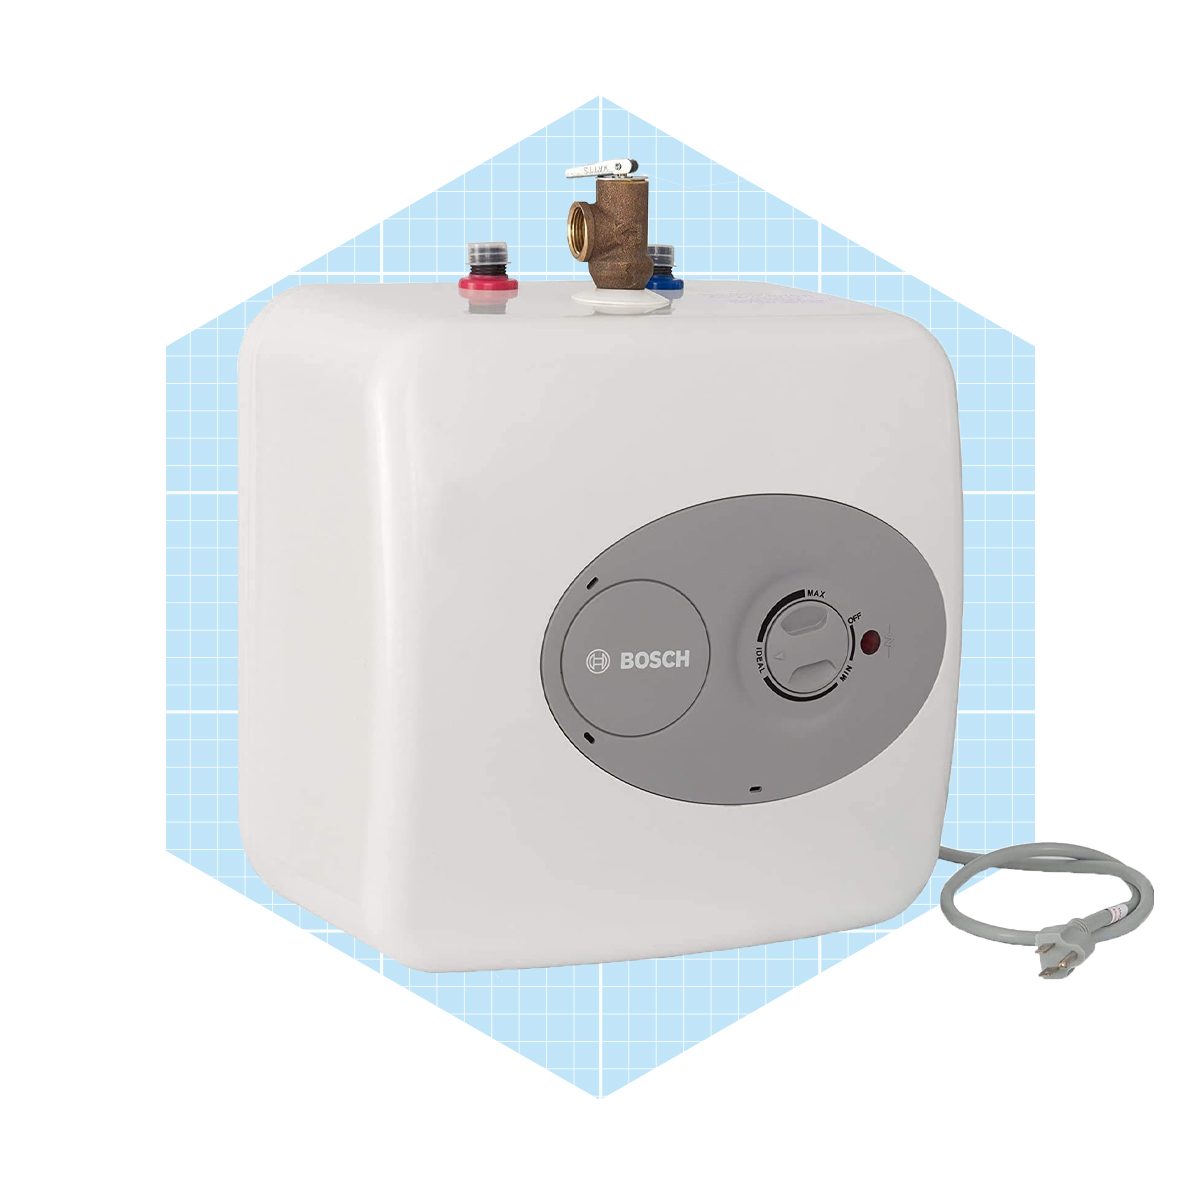 Bosch Electric Mini Tank Water Heater Ecomm Amazon.com